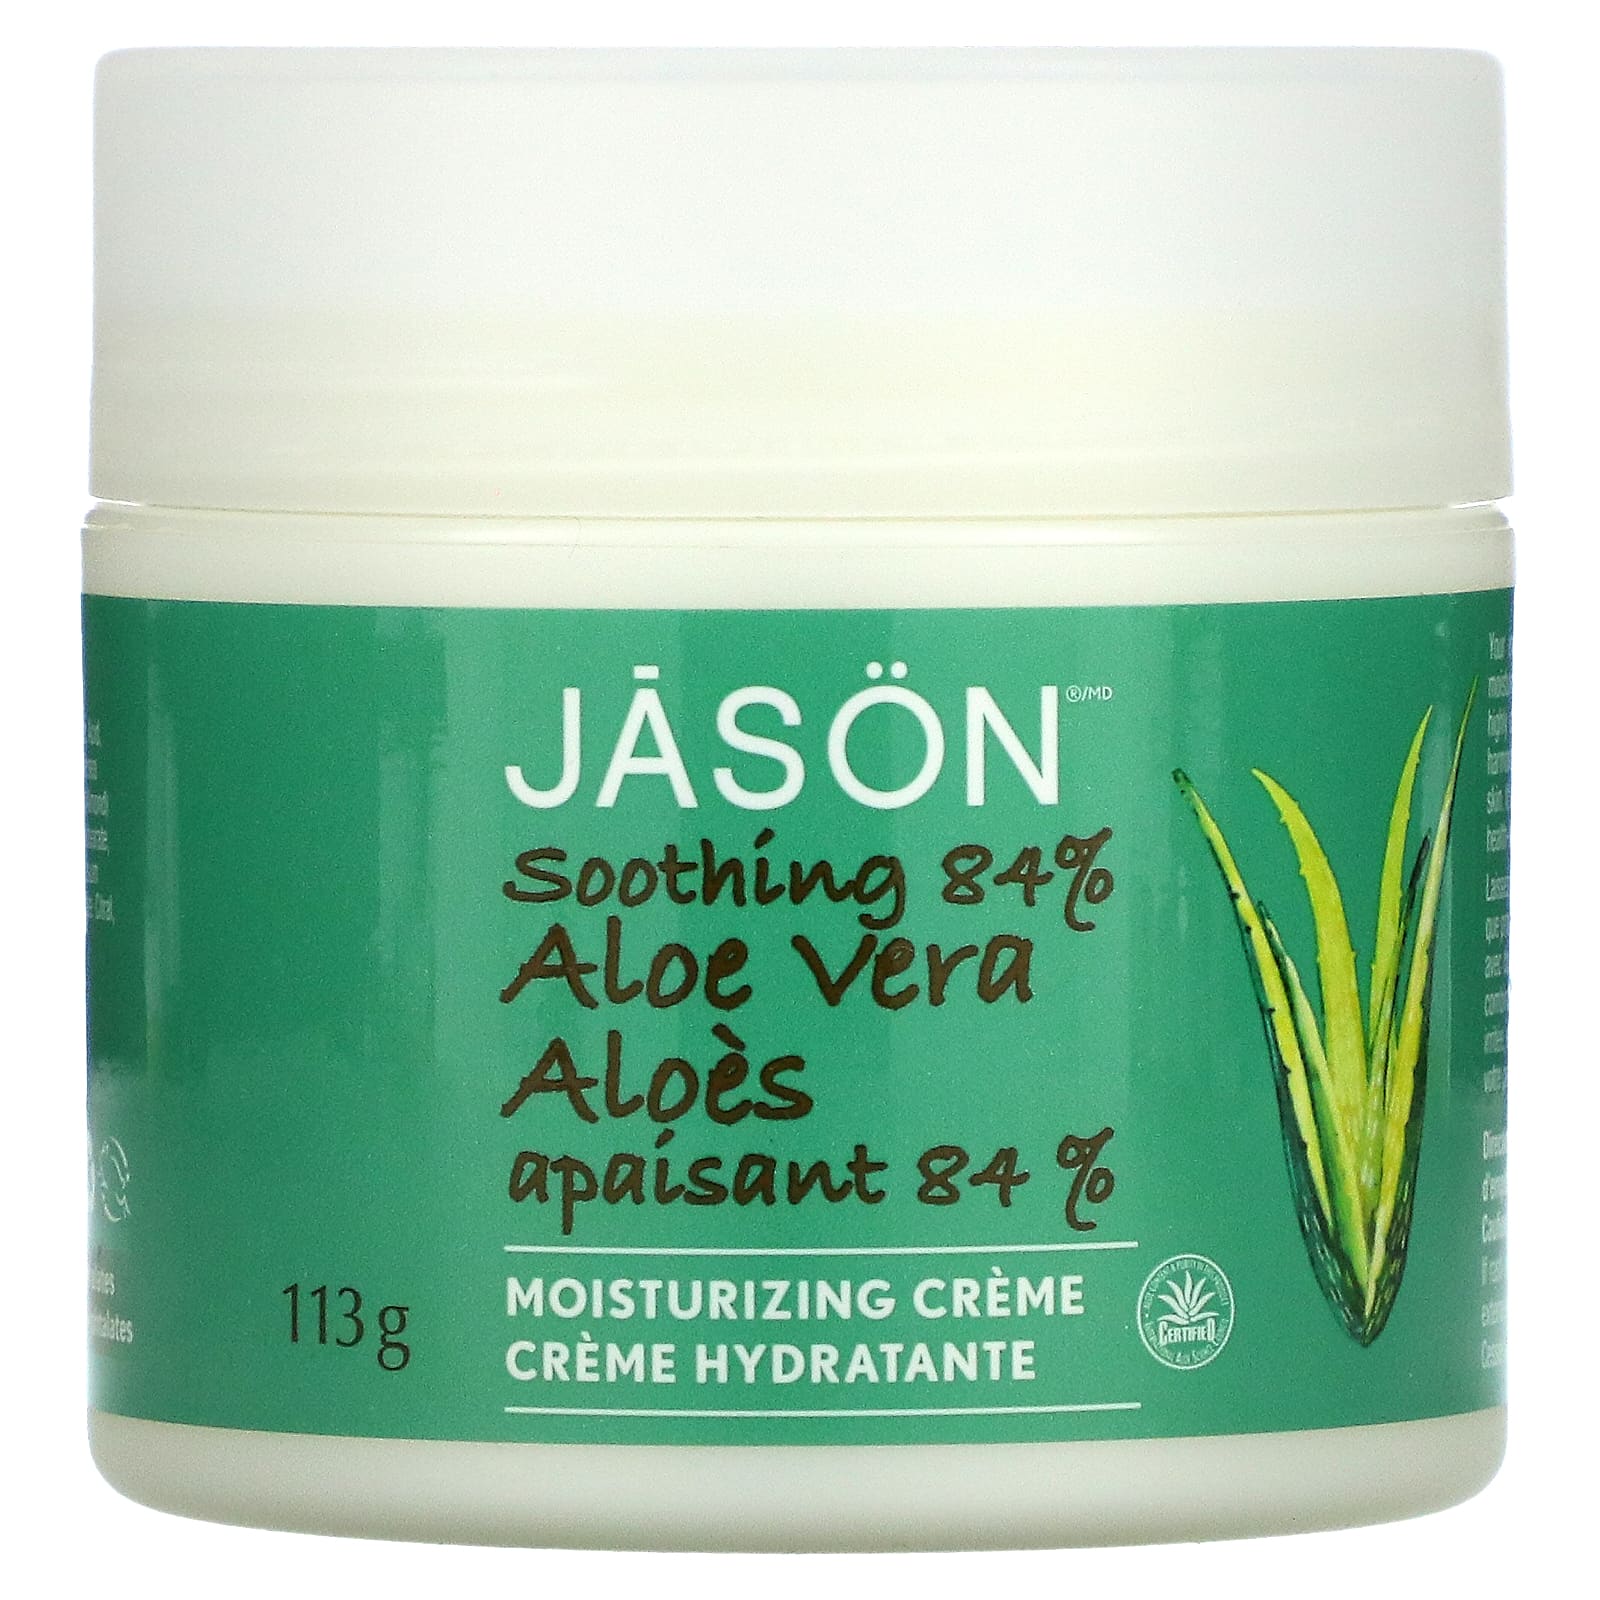 Jason Natural Aloe Vera 84% Moisturizing Creme Soothing 4 oz (113 g) jason natural c effects крем 57 г 2 унции